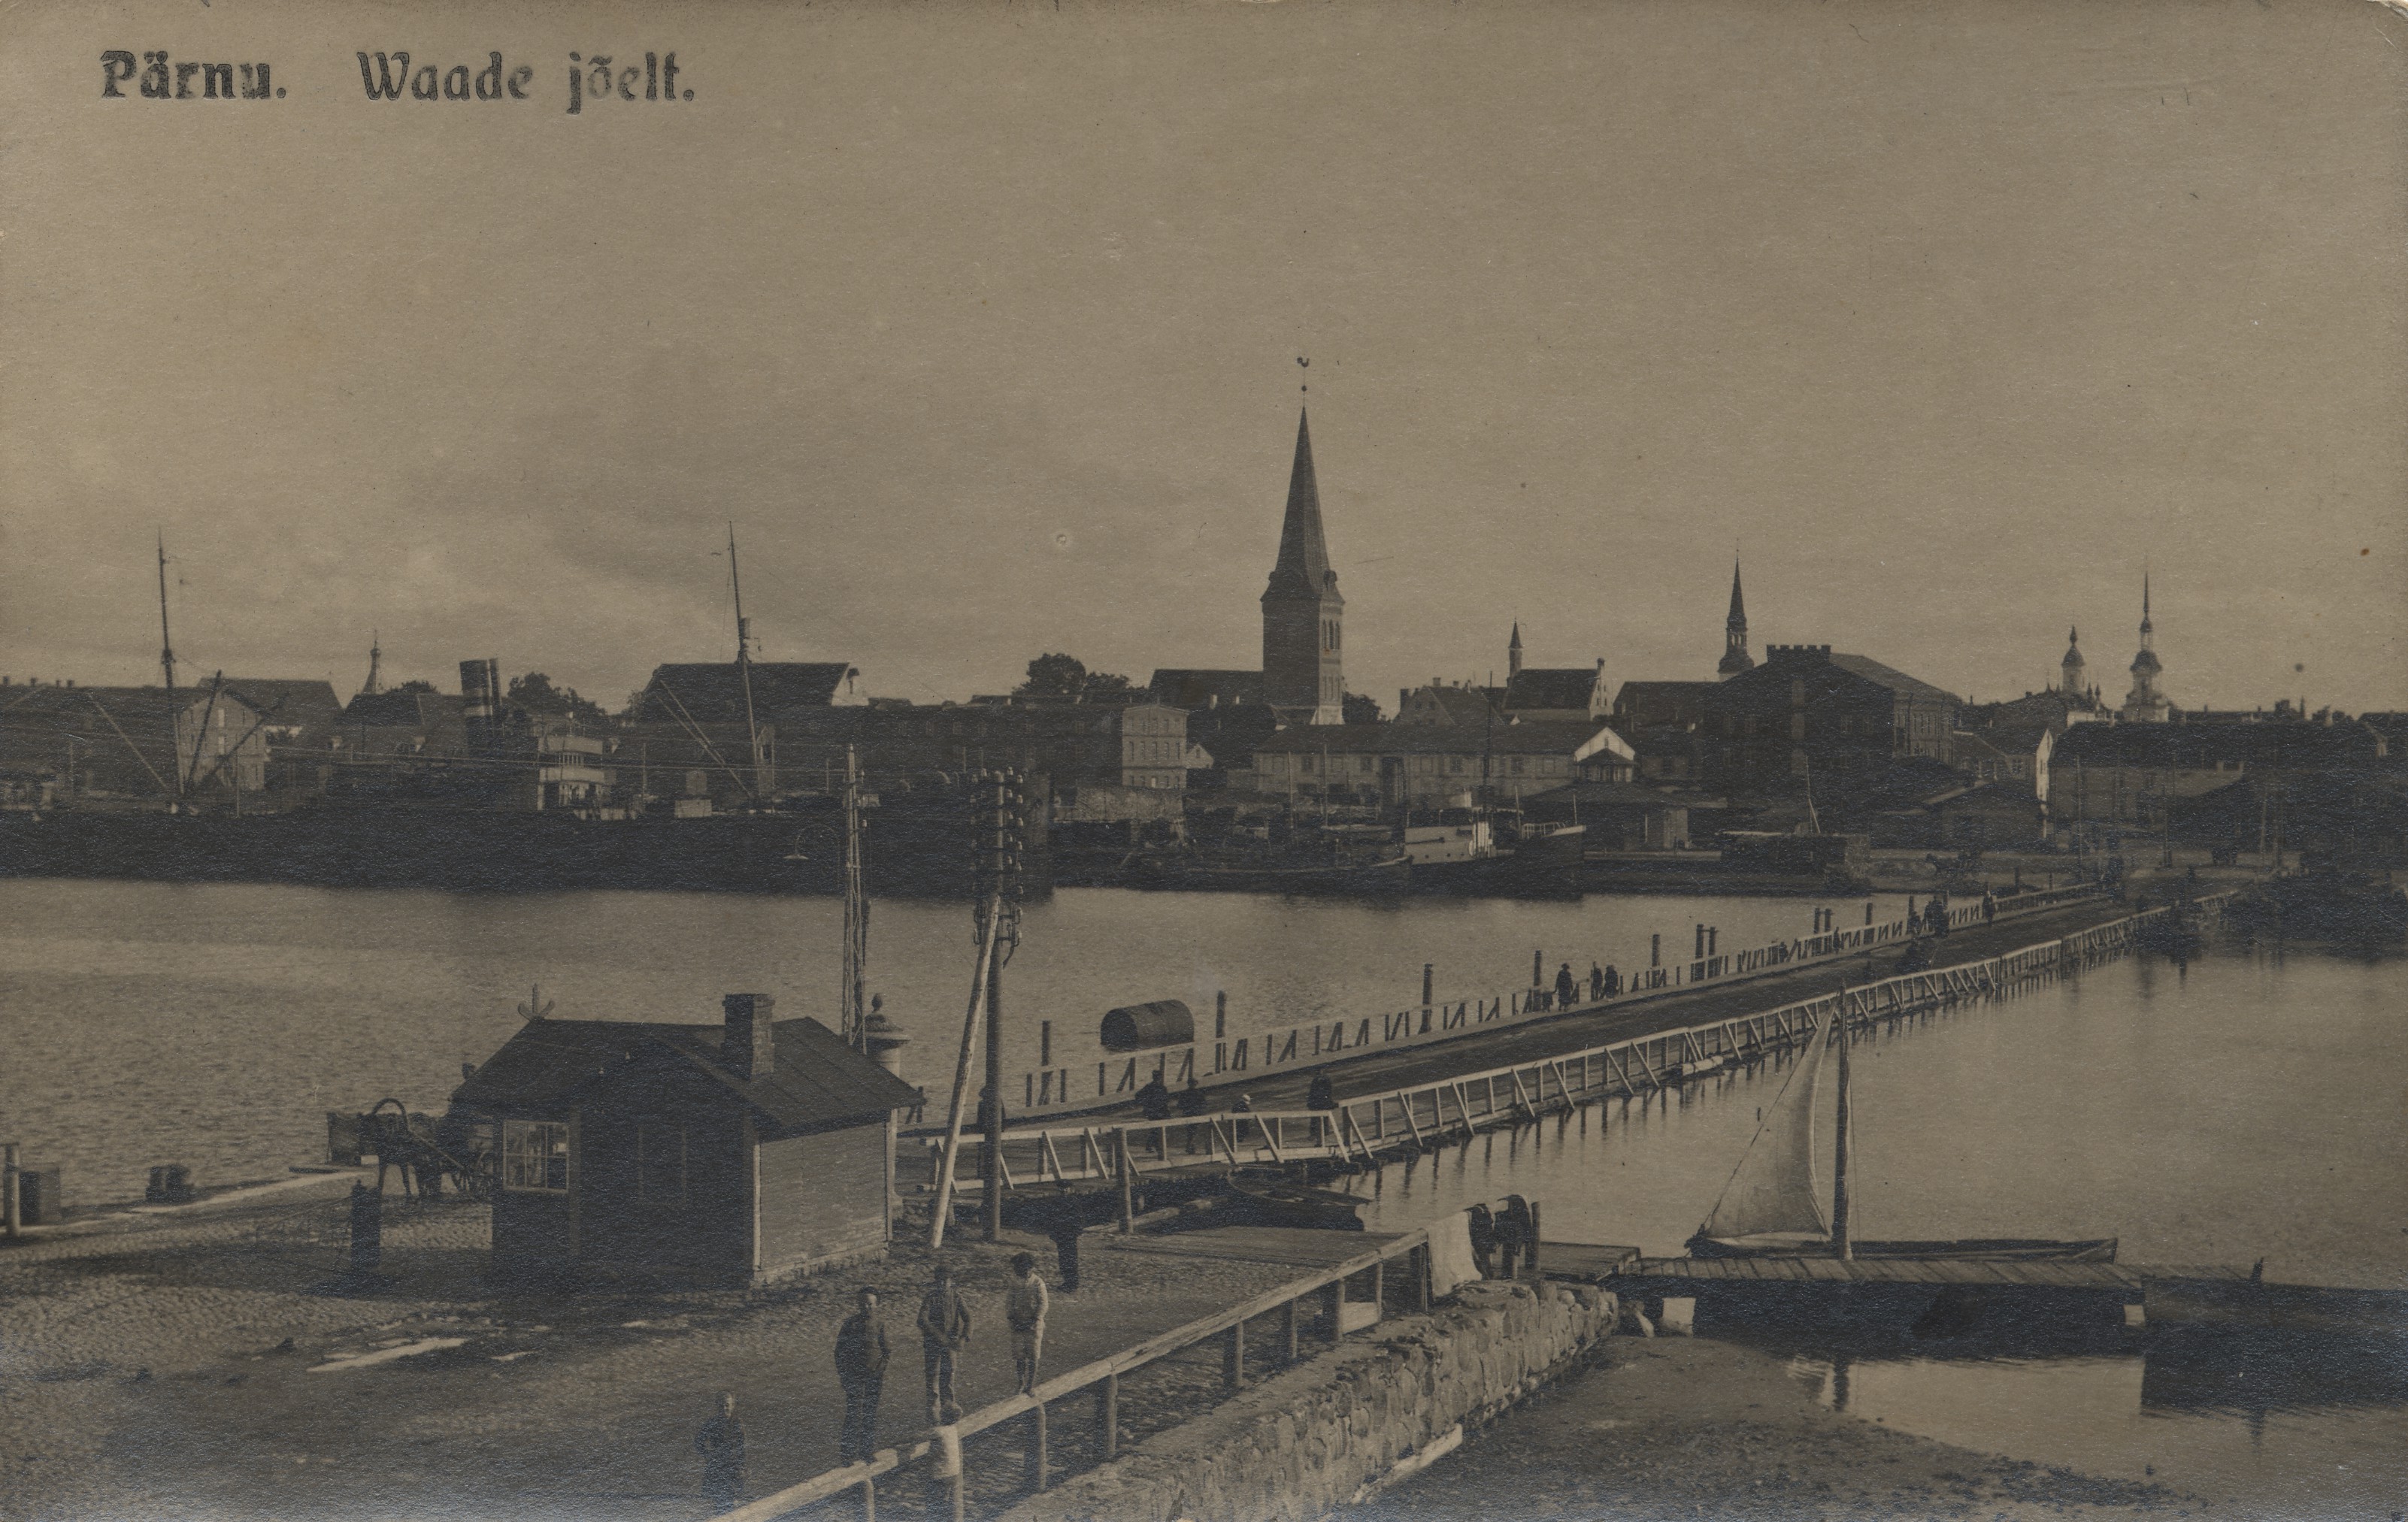 From the Pärnu Wade River